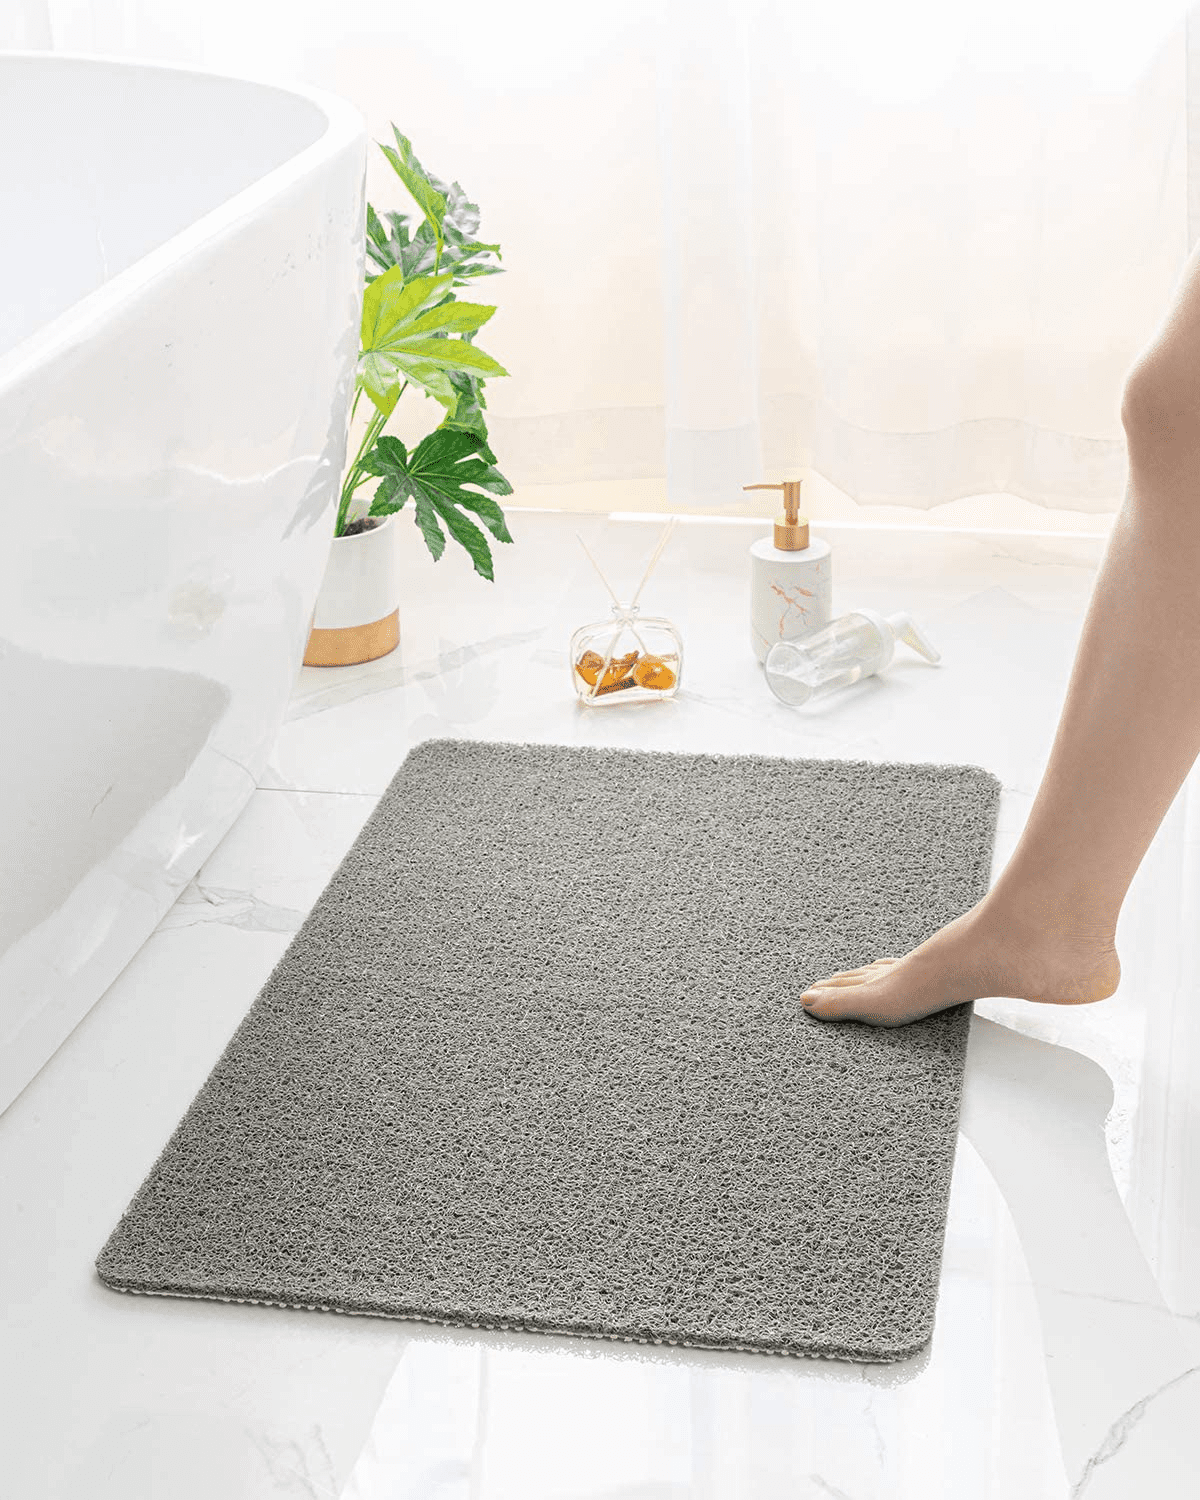 Sutera - Slide Guard Bath Mat, Non Slip, 23.6 x 17.5 Inch, Rubber Bathtub  Mat for Wet Areas, Drains Odor Anti Slim Shower Floor Mat